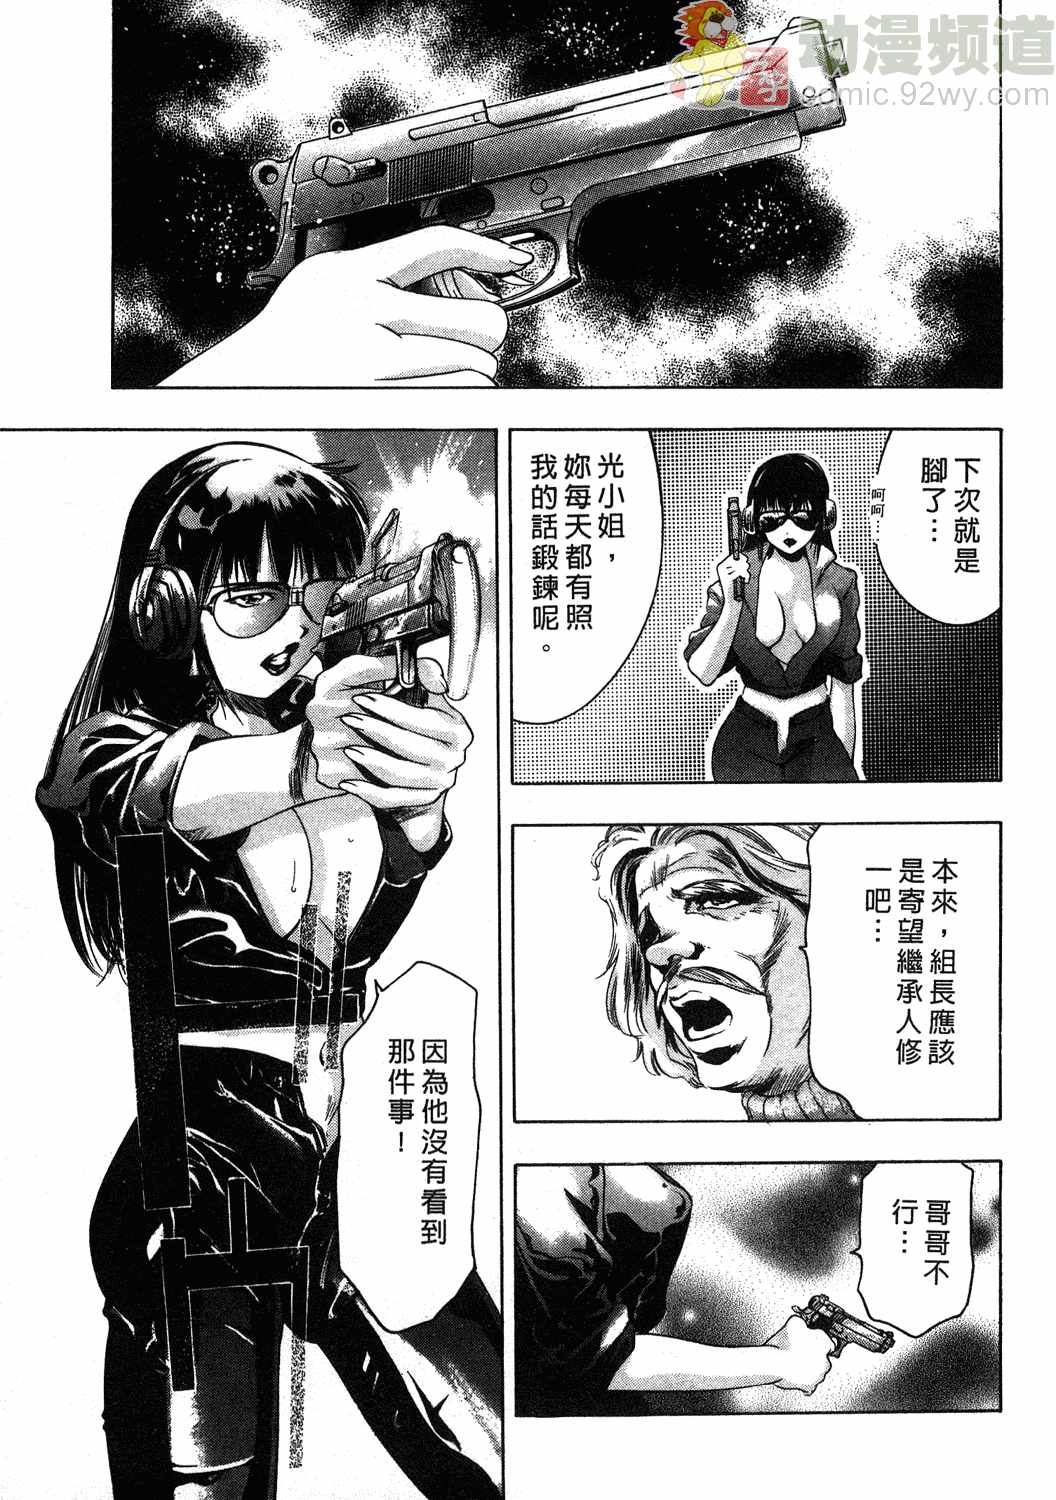 [Hirohisa Onikubo] Female Panther 01 (Chinese) 